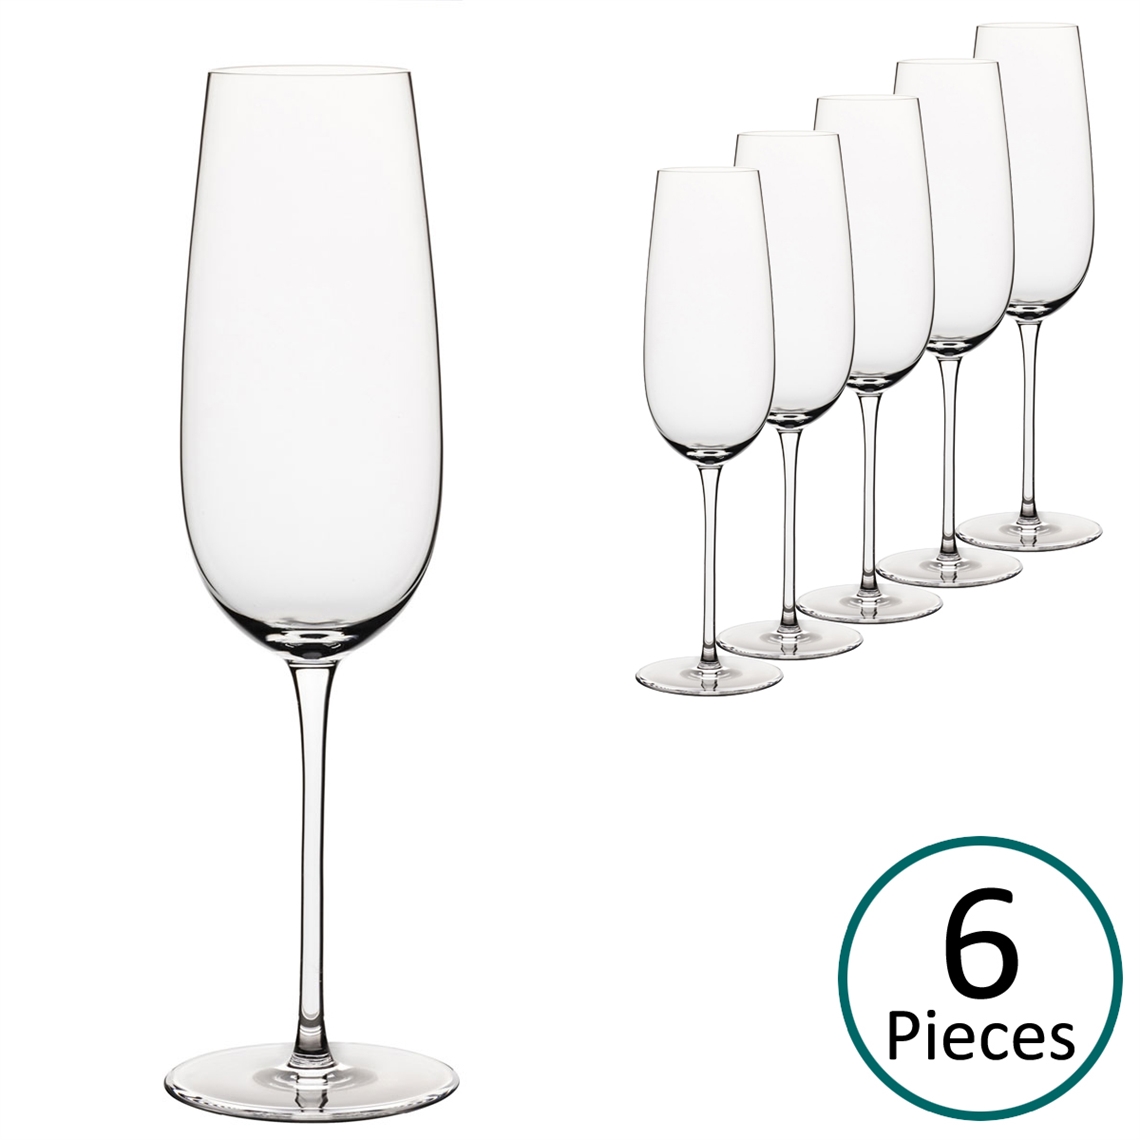 Elia Leila Crystal Champagne/Sparkling Wine Glass - Set of 6